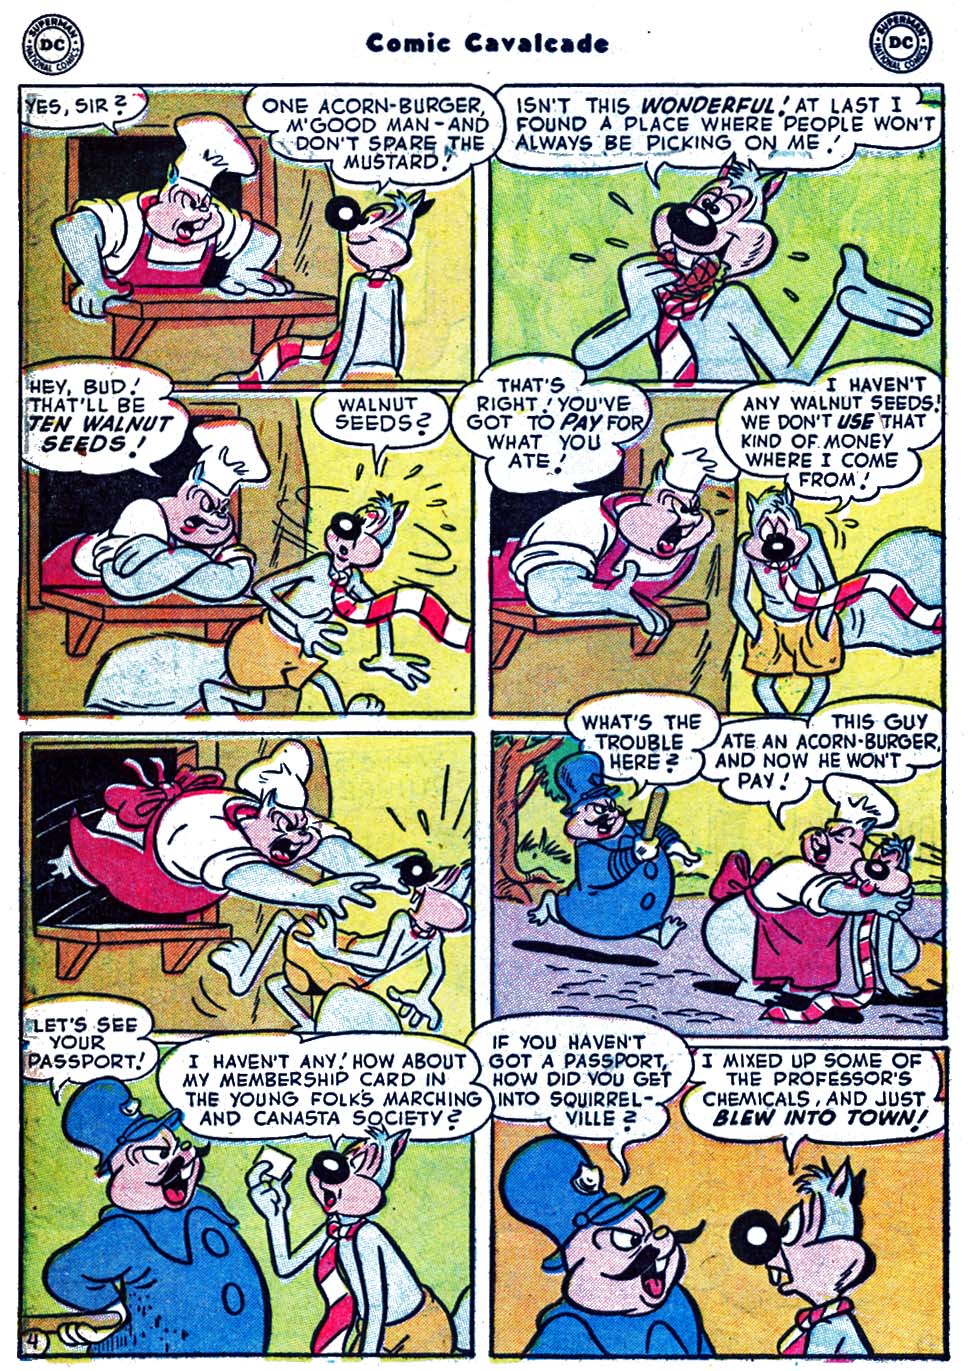 Comic Cavalcade issue 53 - Page 12